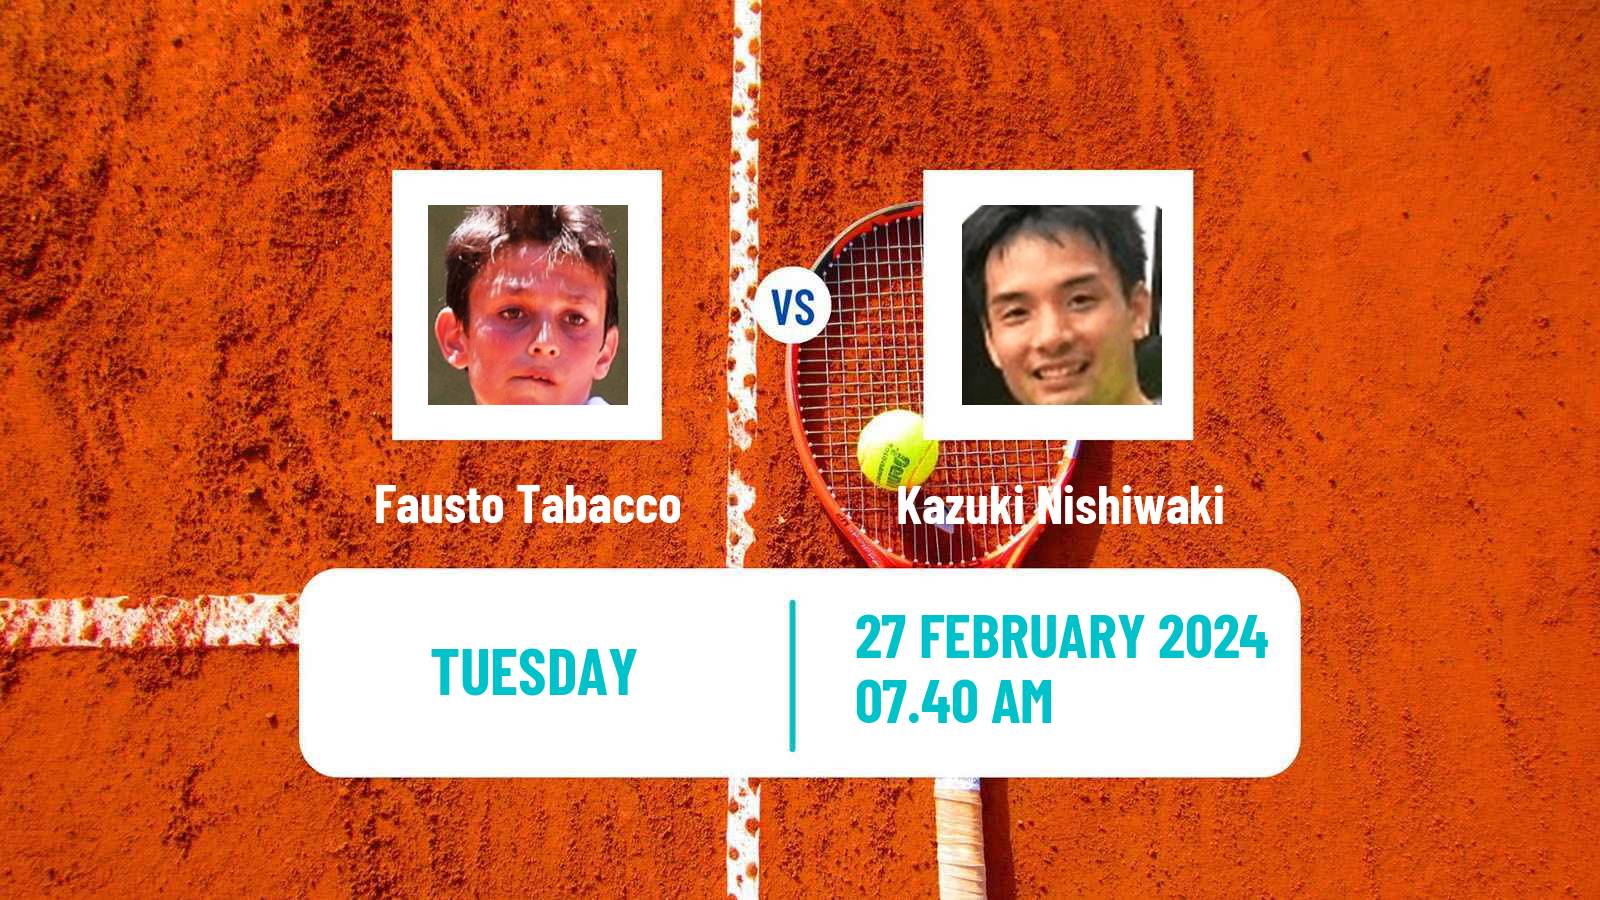 Tennis ITF M15 Villena 2 Men Fausto Tabacco - Kazuki Nishiwaki